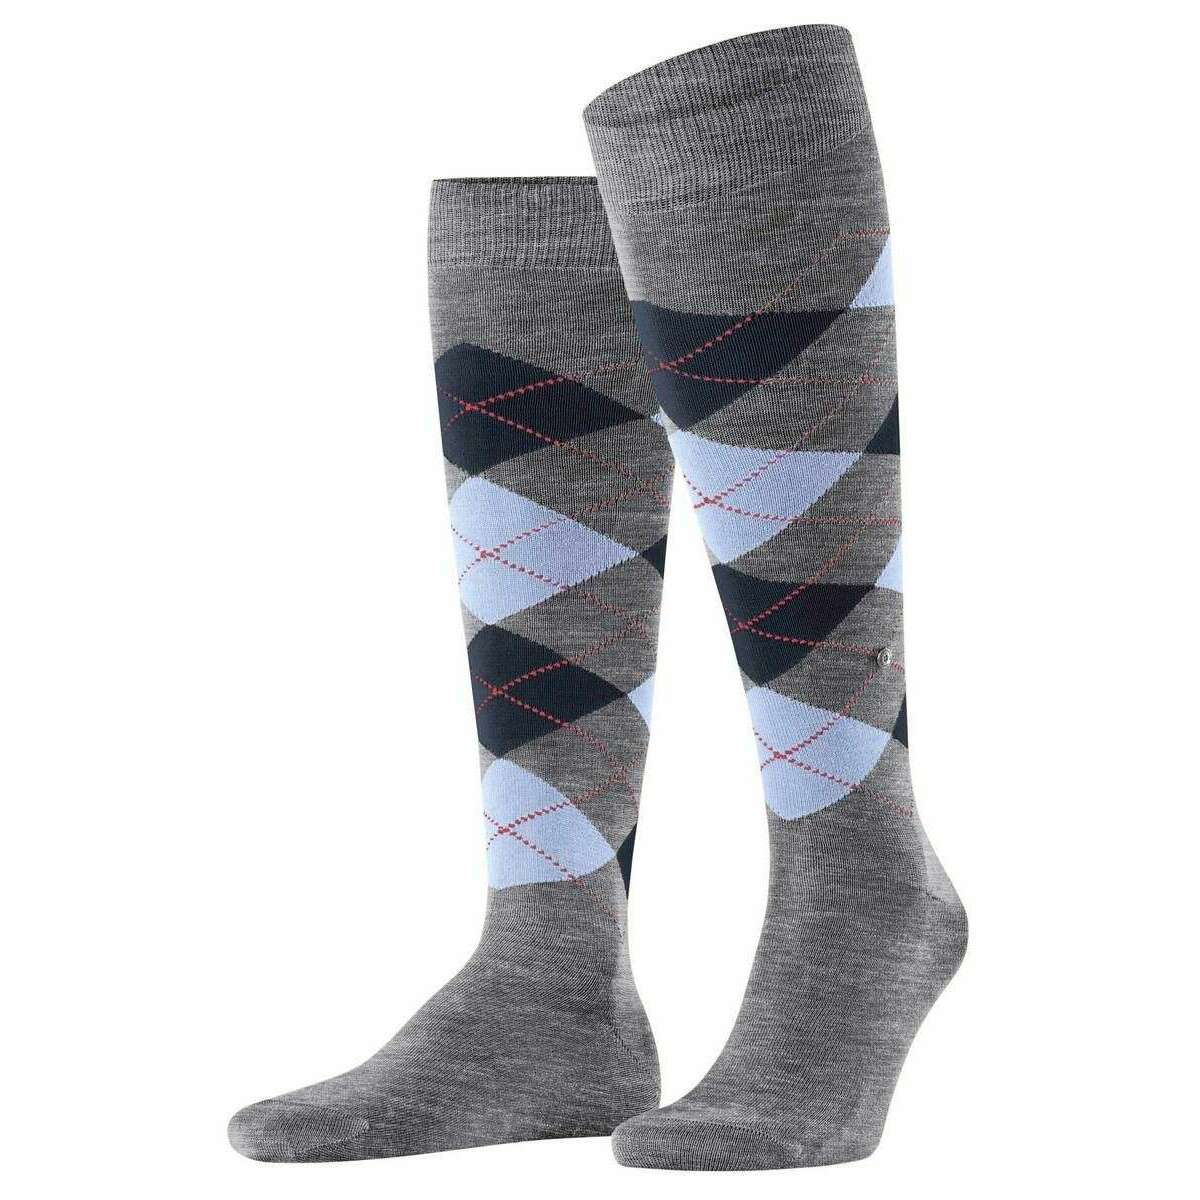 Burlington Manchester Knee High Socks - Concrete Grey